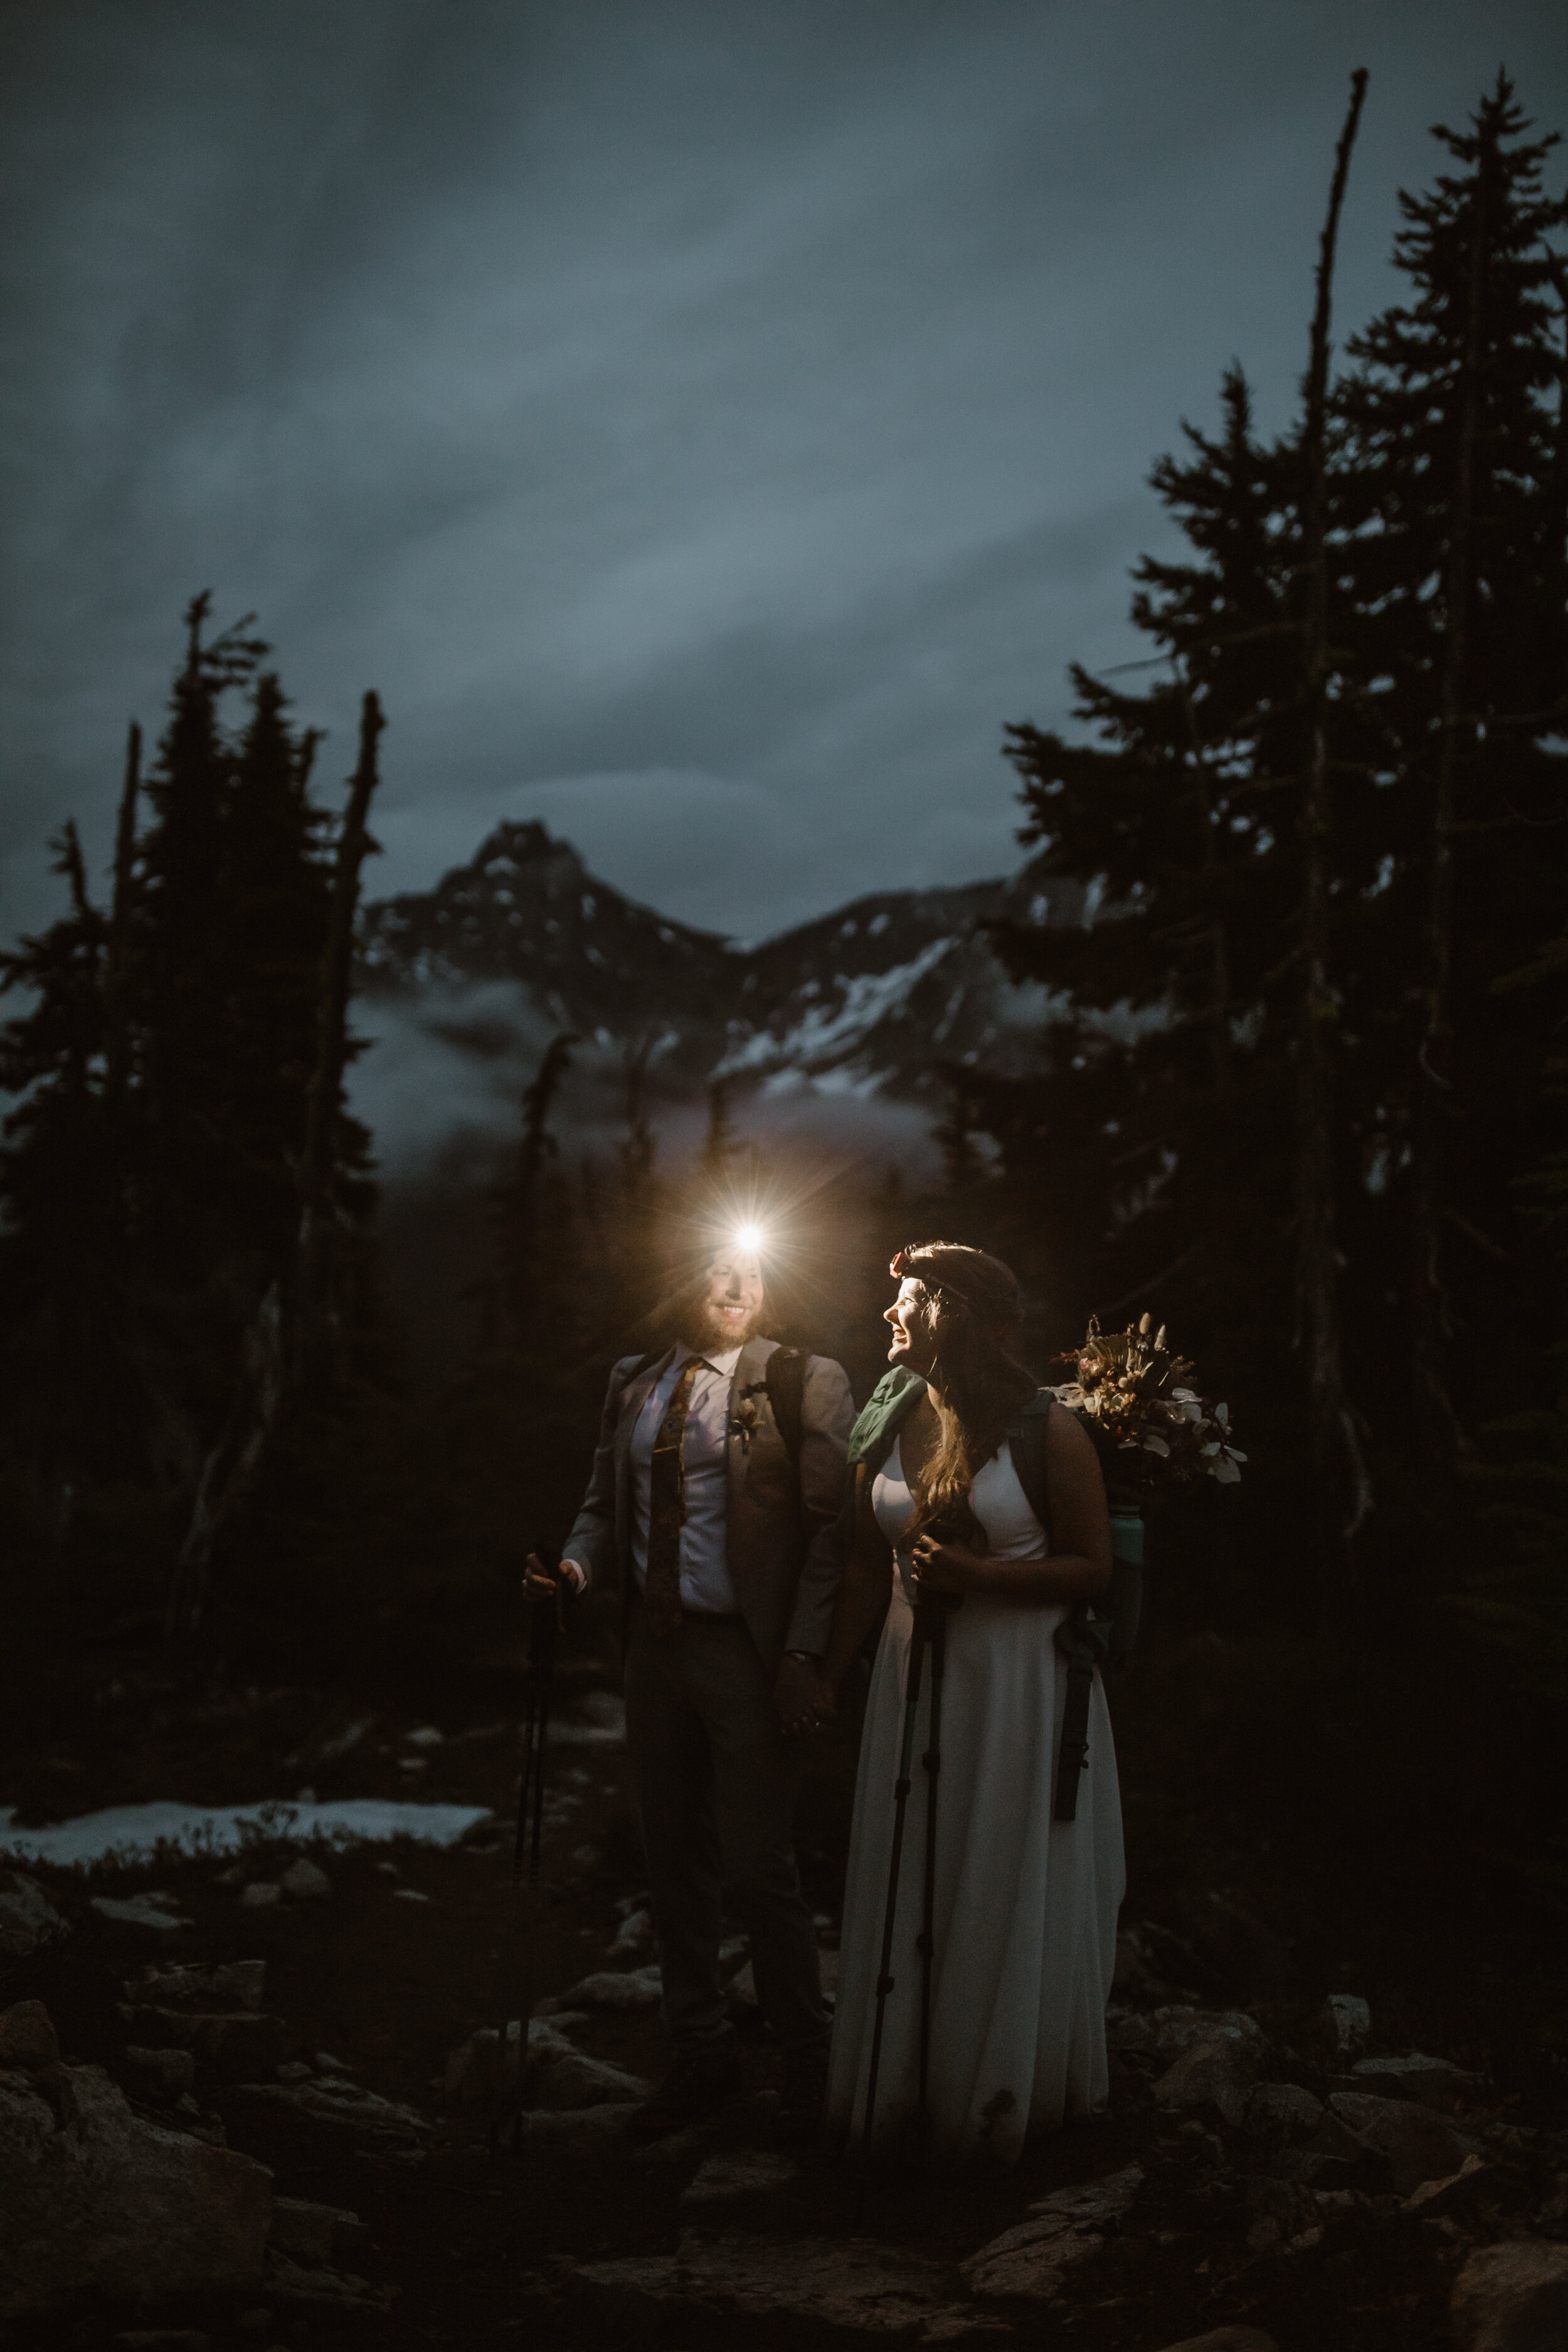 Nicole-Daacke-Photography-adventure-couple-night-hike-bride-and-groom.jpg